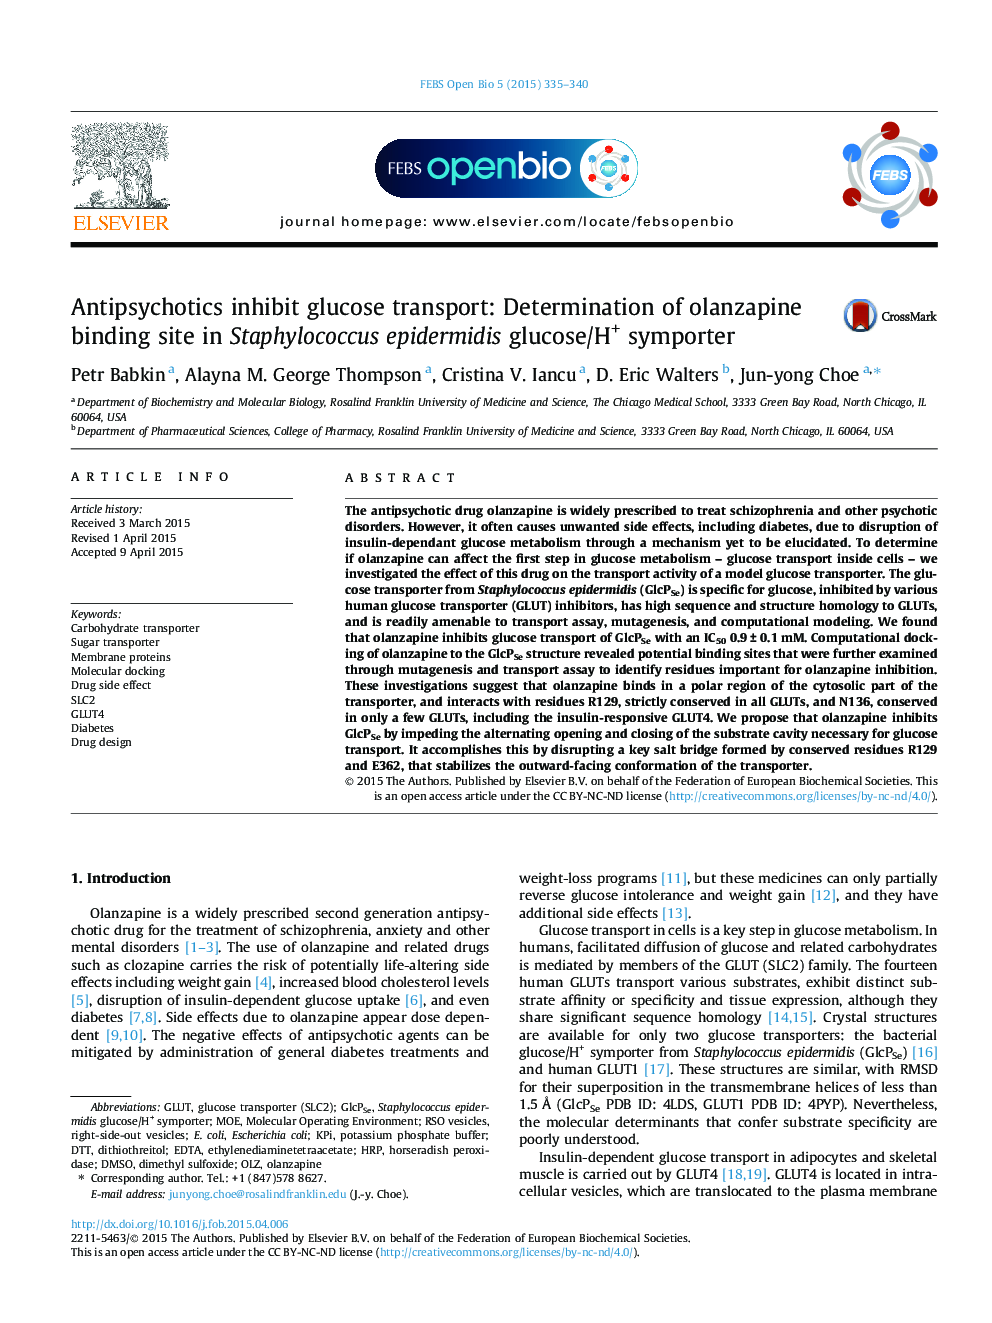 Antipsychotics inhibit glucose transport: Determination of olanzapine binding site in Staphylococcus epidermidis glucose/H+ symporter